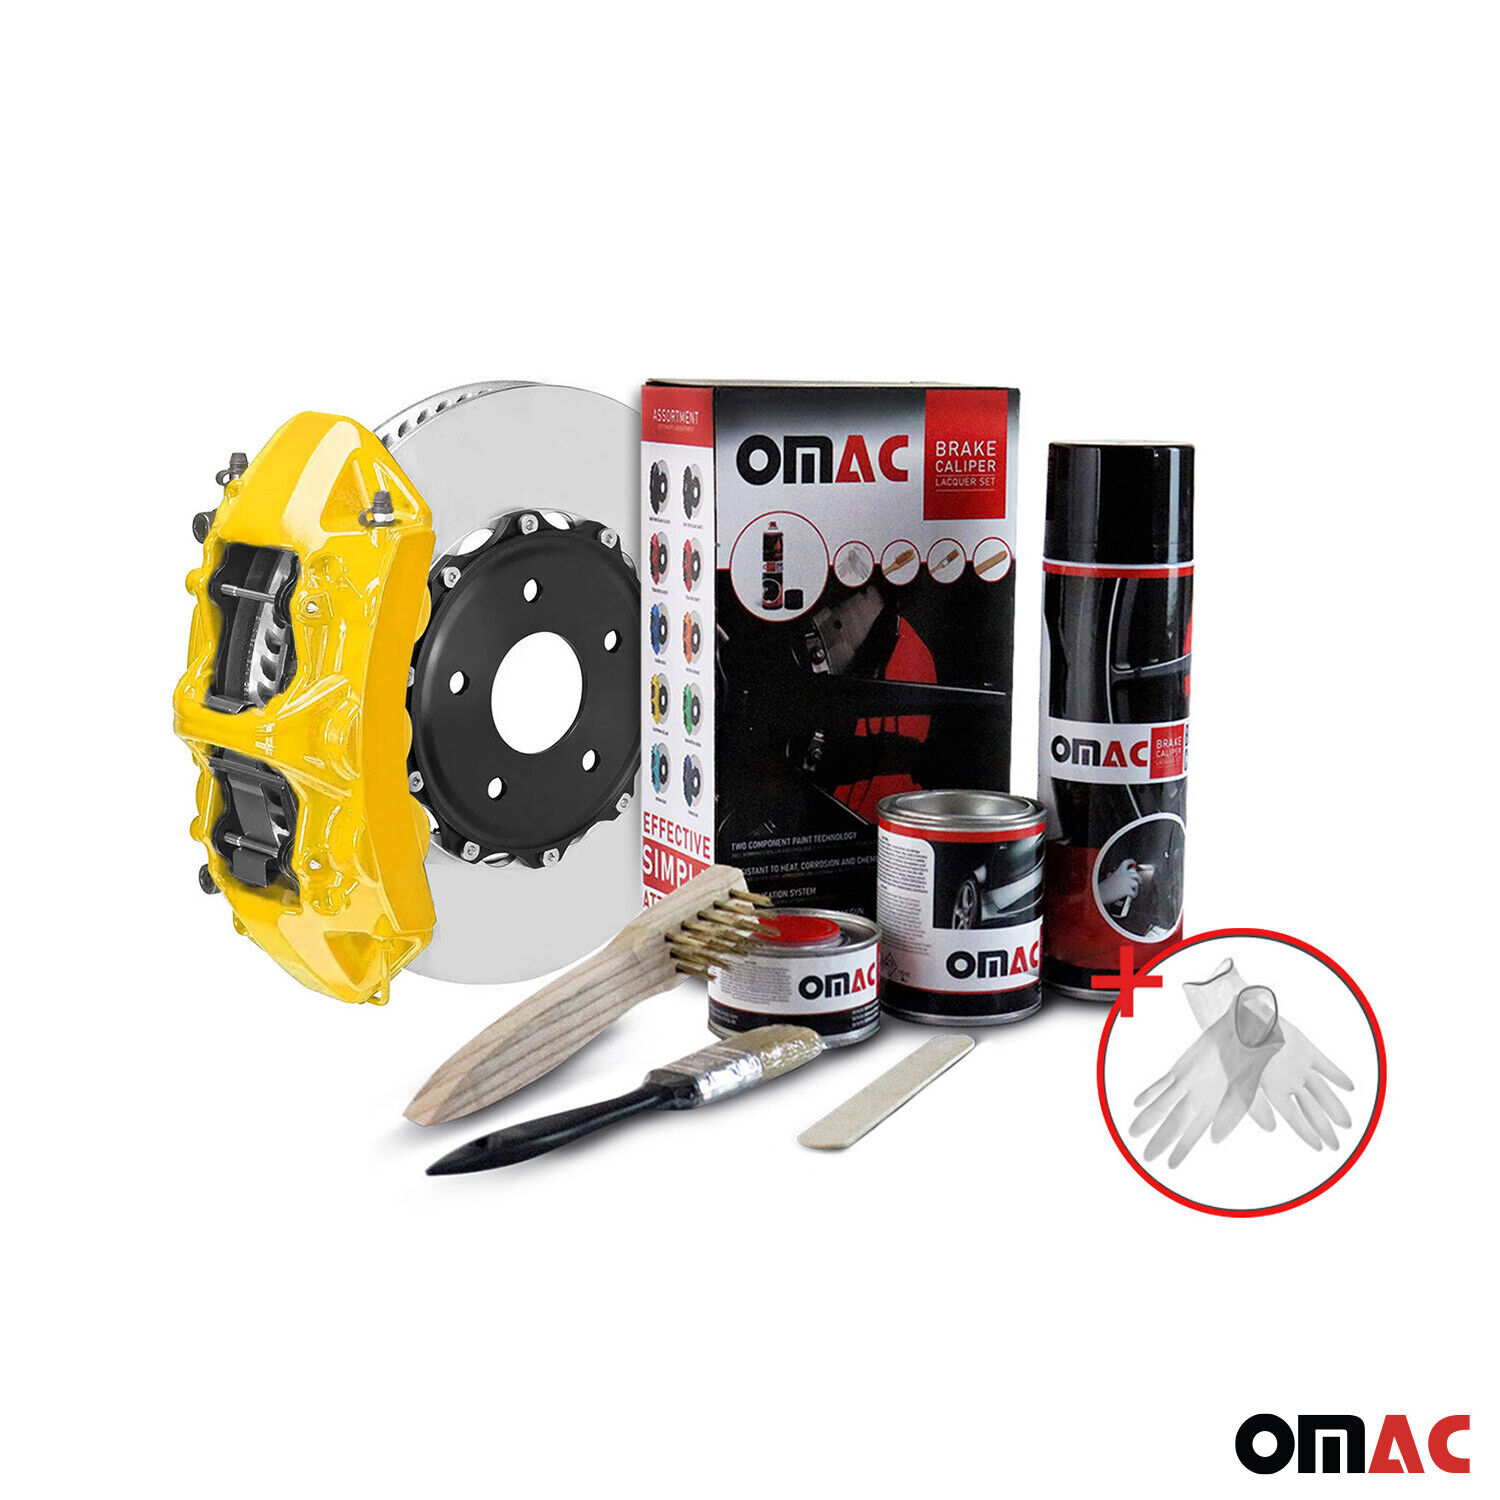 OMAC Brake Caliper Paint Epoxy Based Car Kit Yellow Glossy High-Temperature